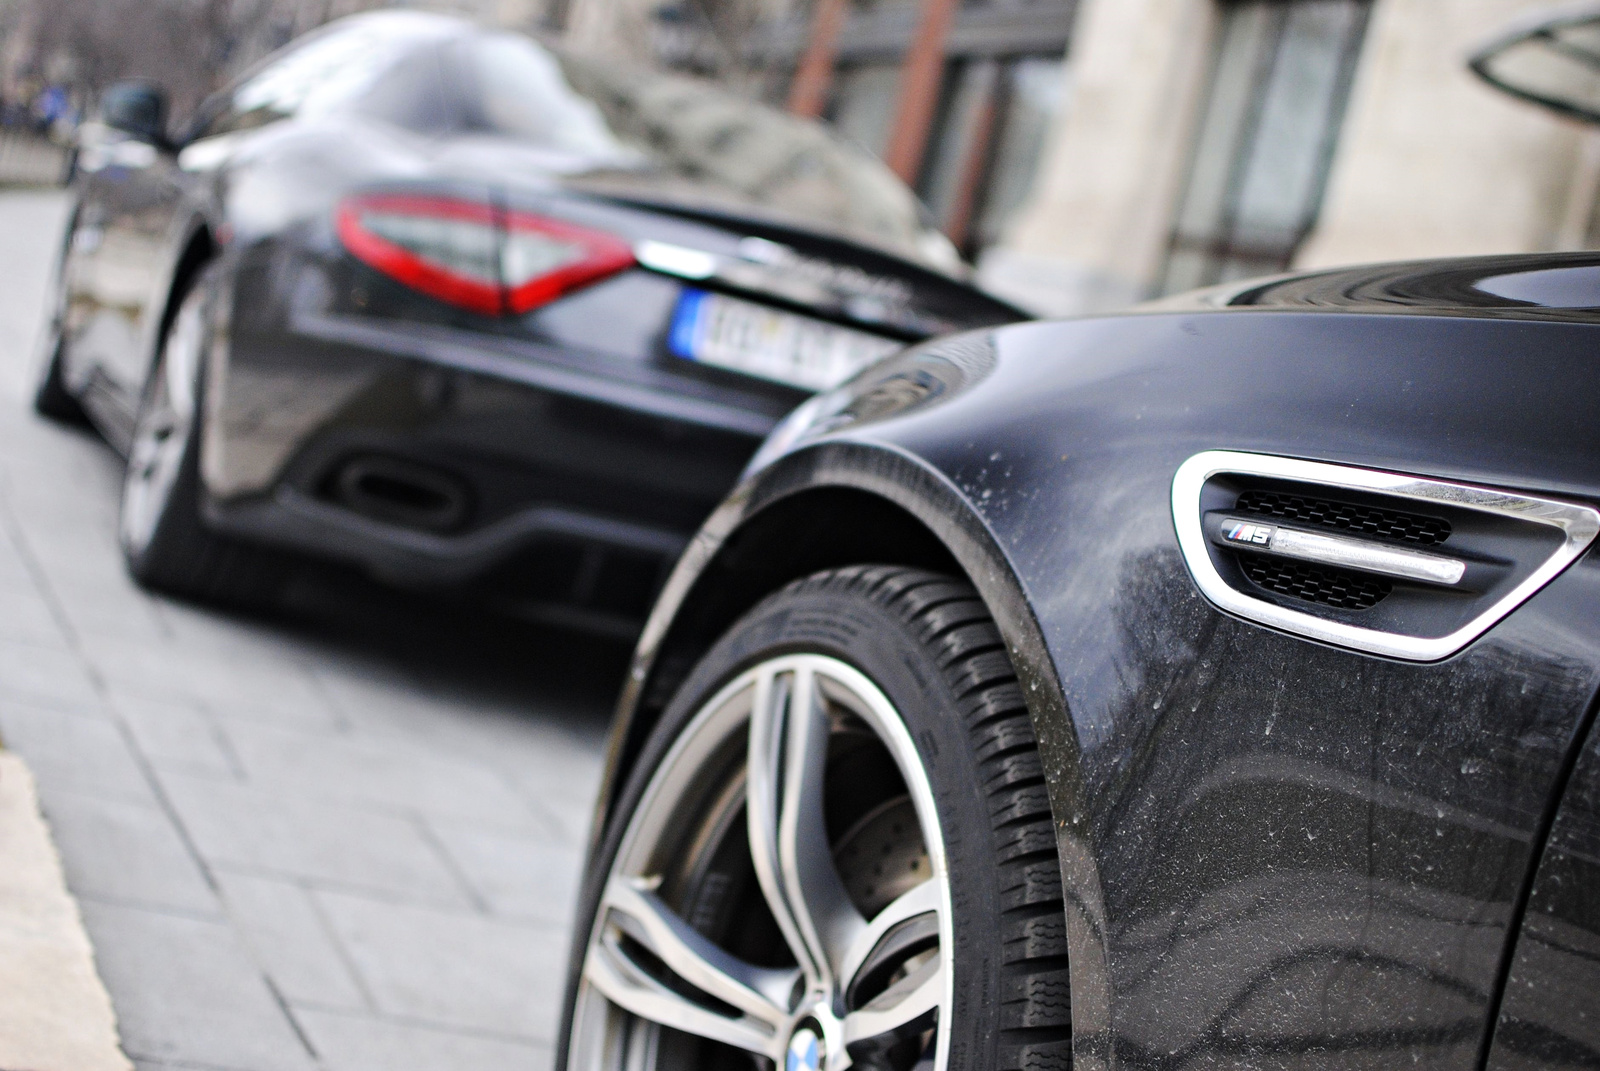 Maserati GranTurismo Sport és BMW M5